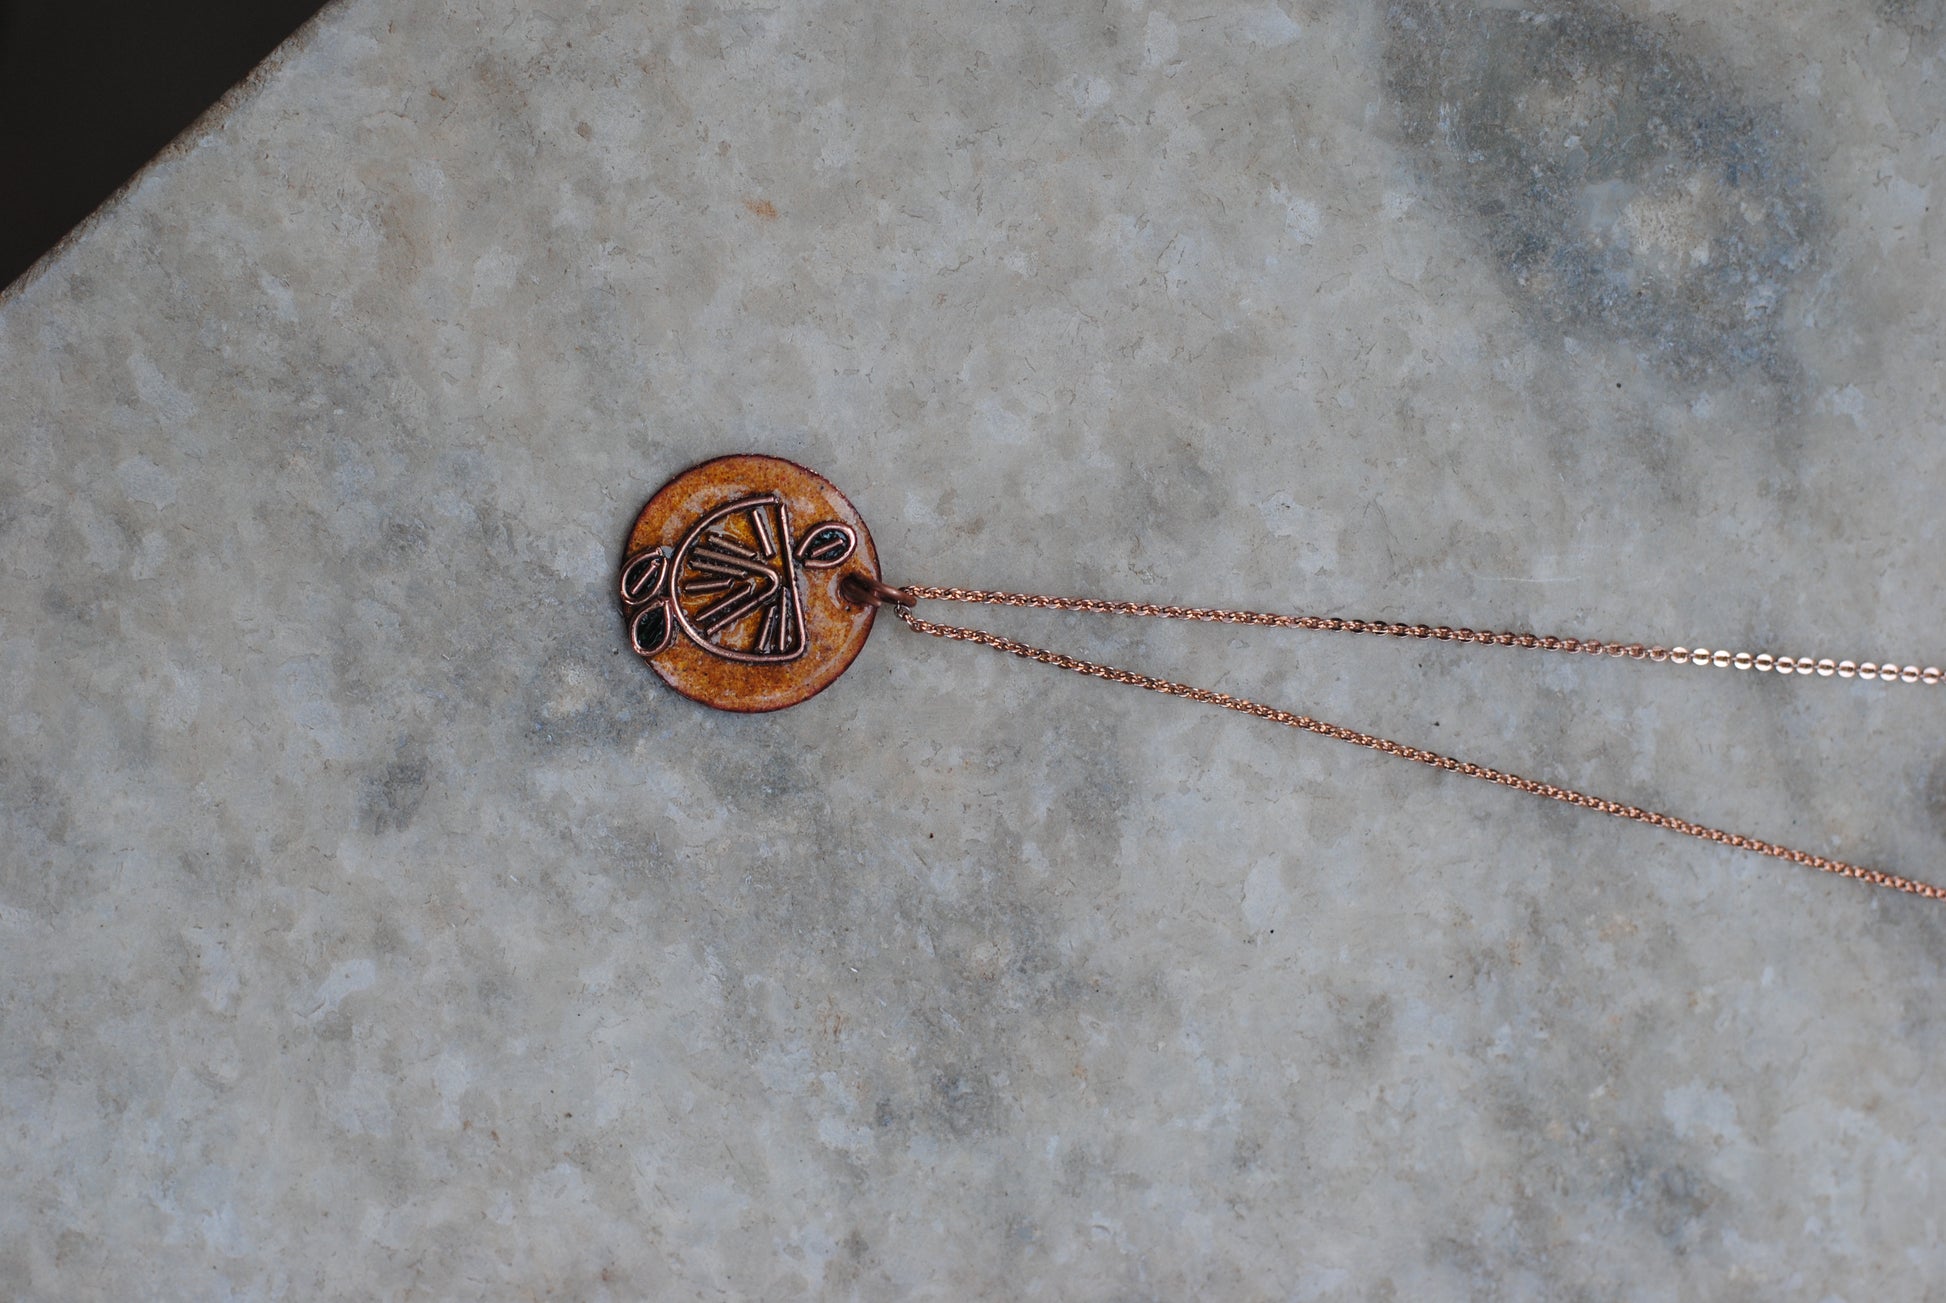 Copper enamel jewelry, funky pendant handcrafted in Maharashtra, India. Lemon theme